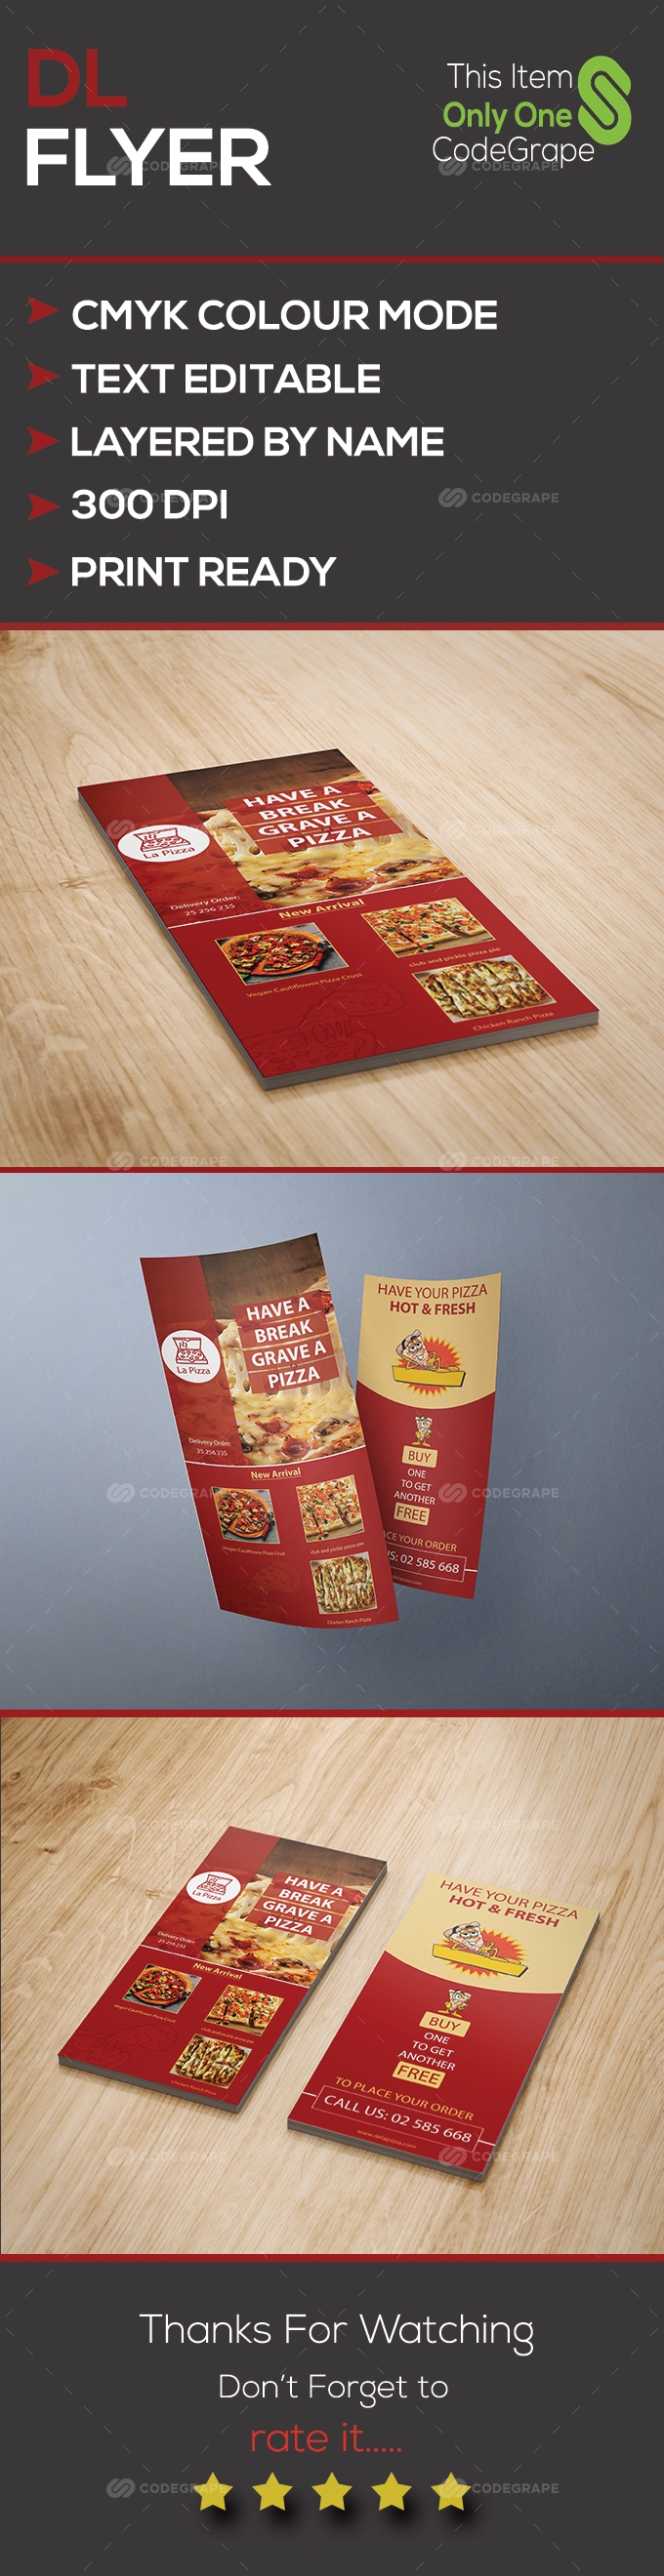 Pizza Shop DL Flyer